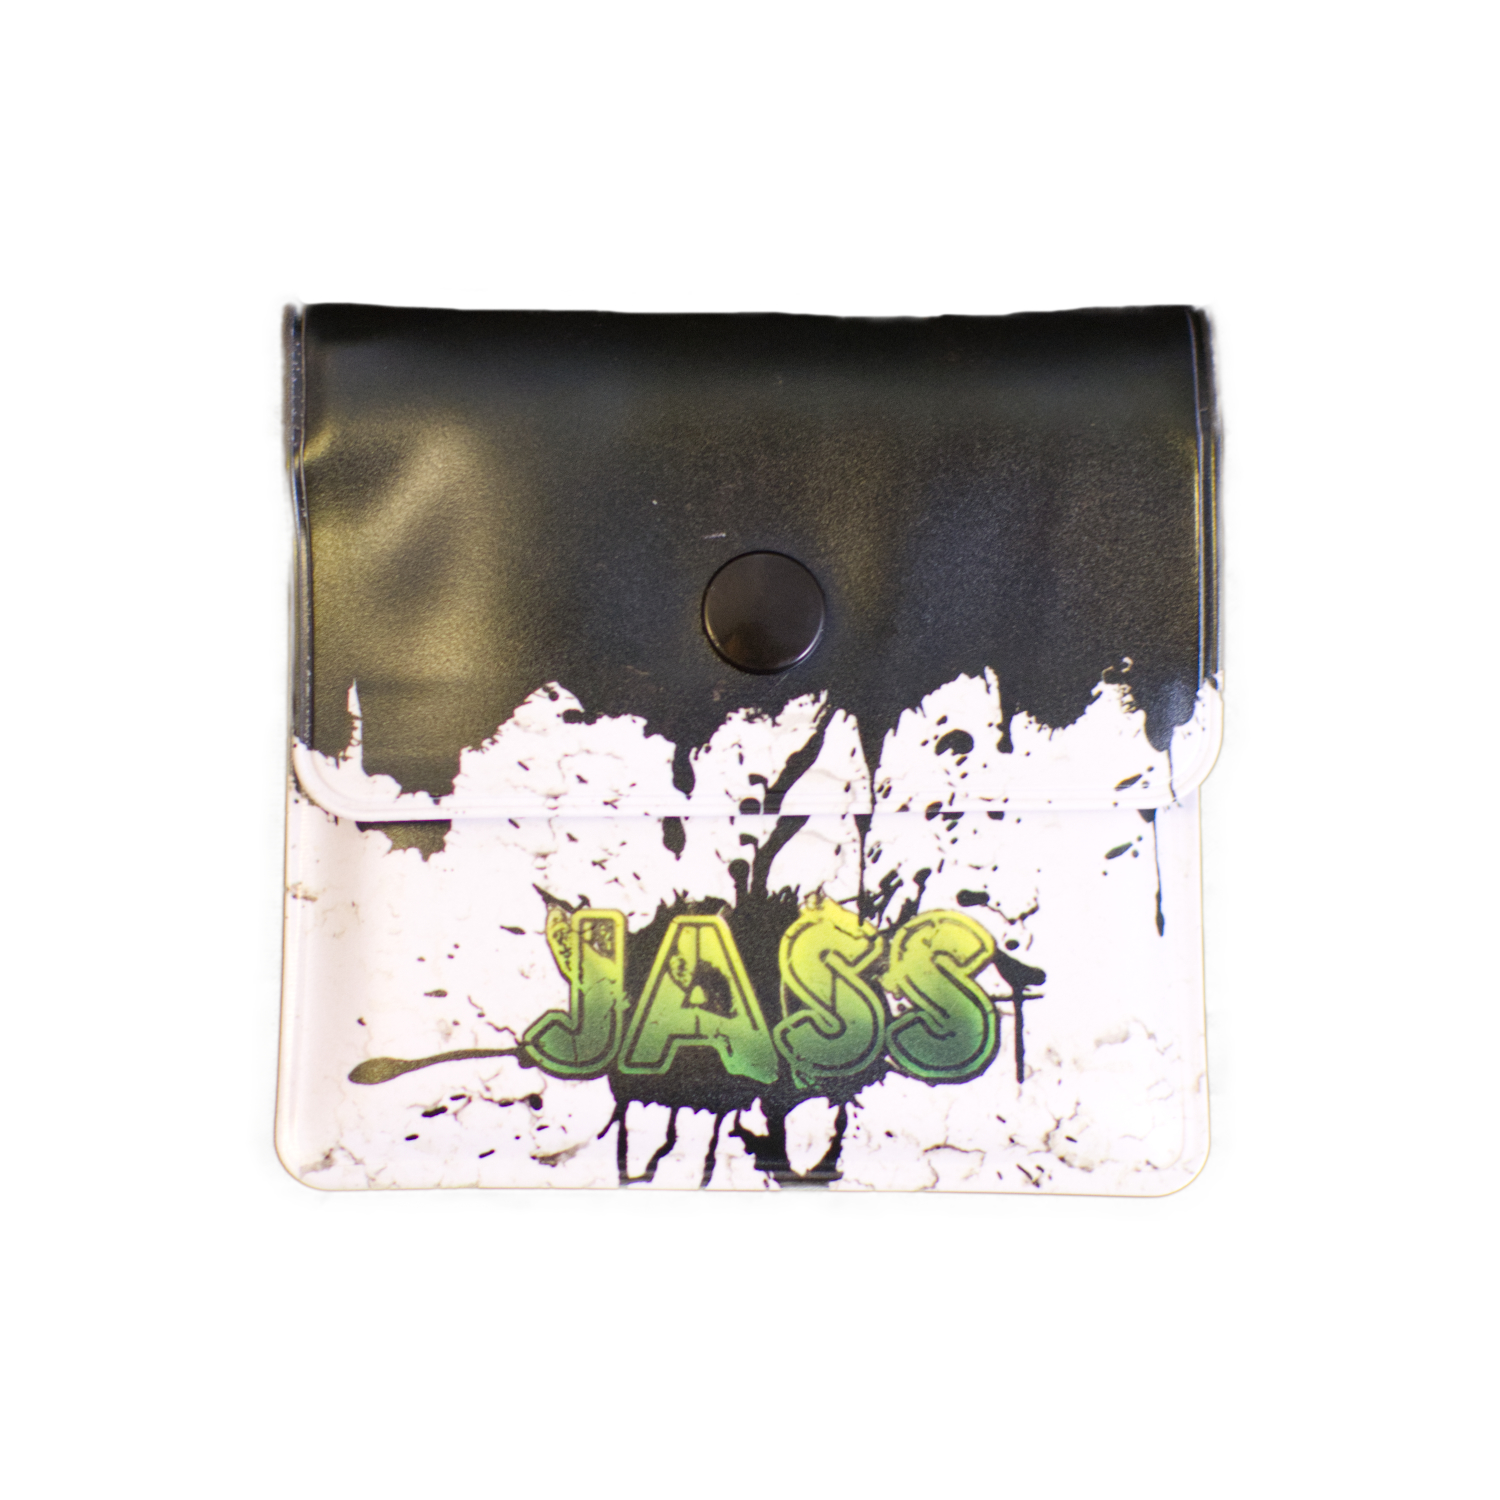 Cendrier de poche “Jass”